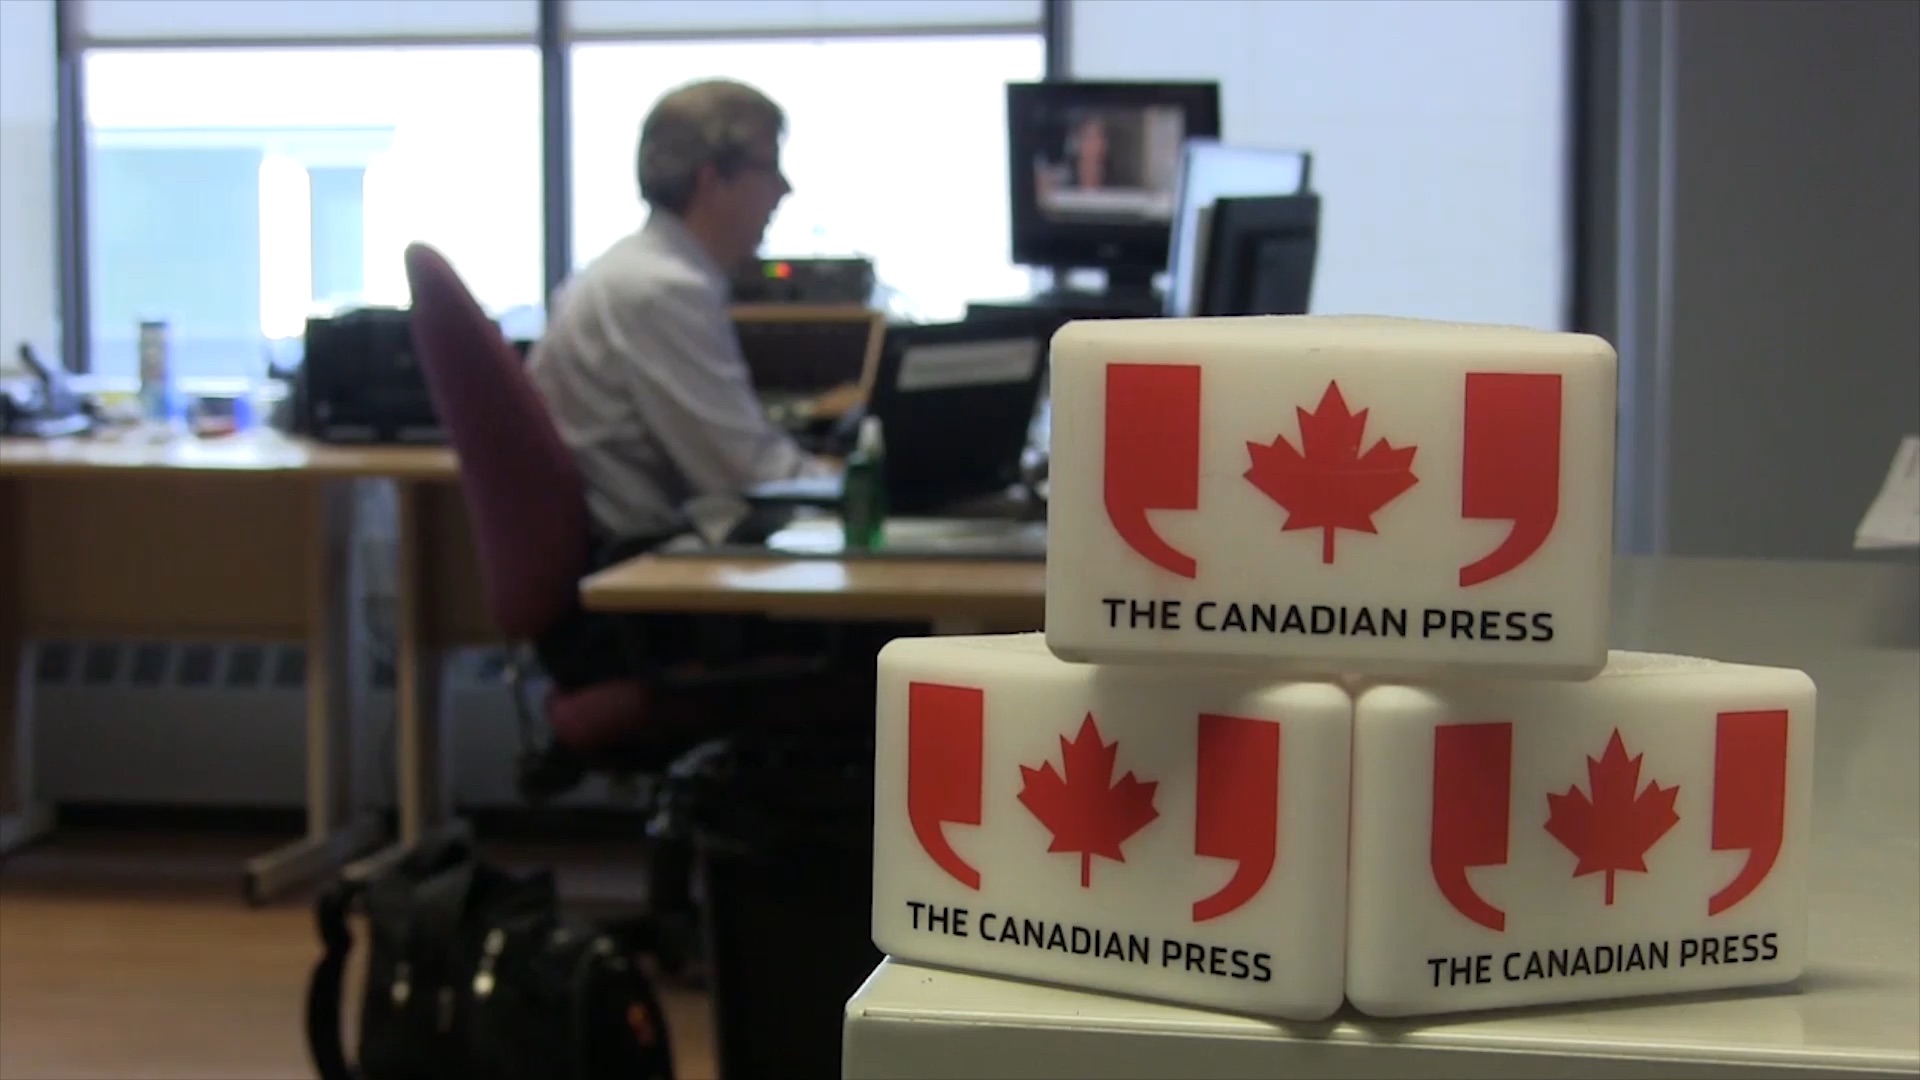 Inside the CP newsroom